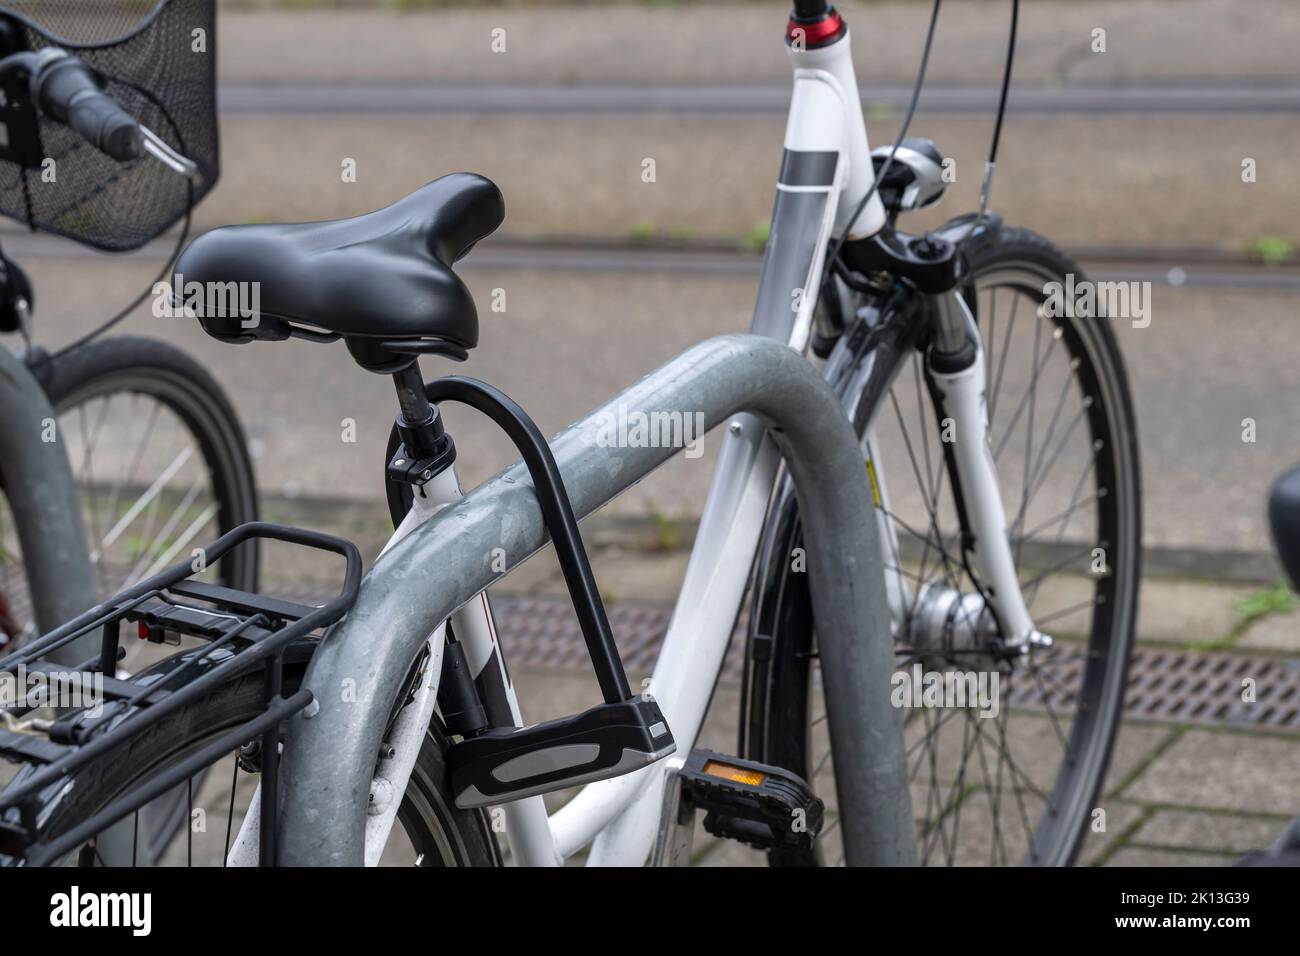 A U-lock on the bicycle Stock Photo